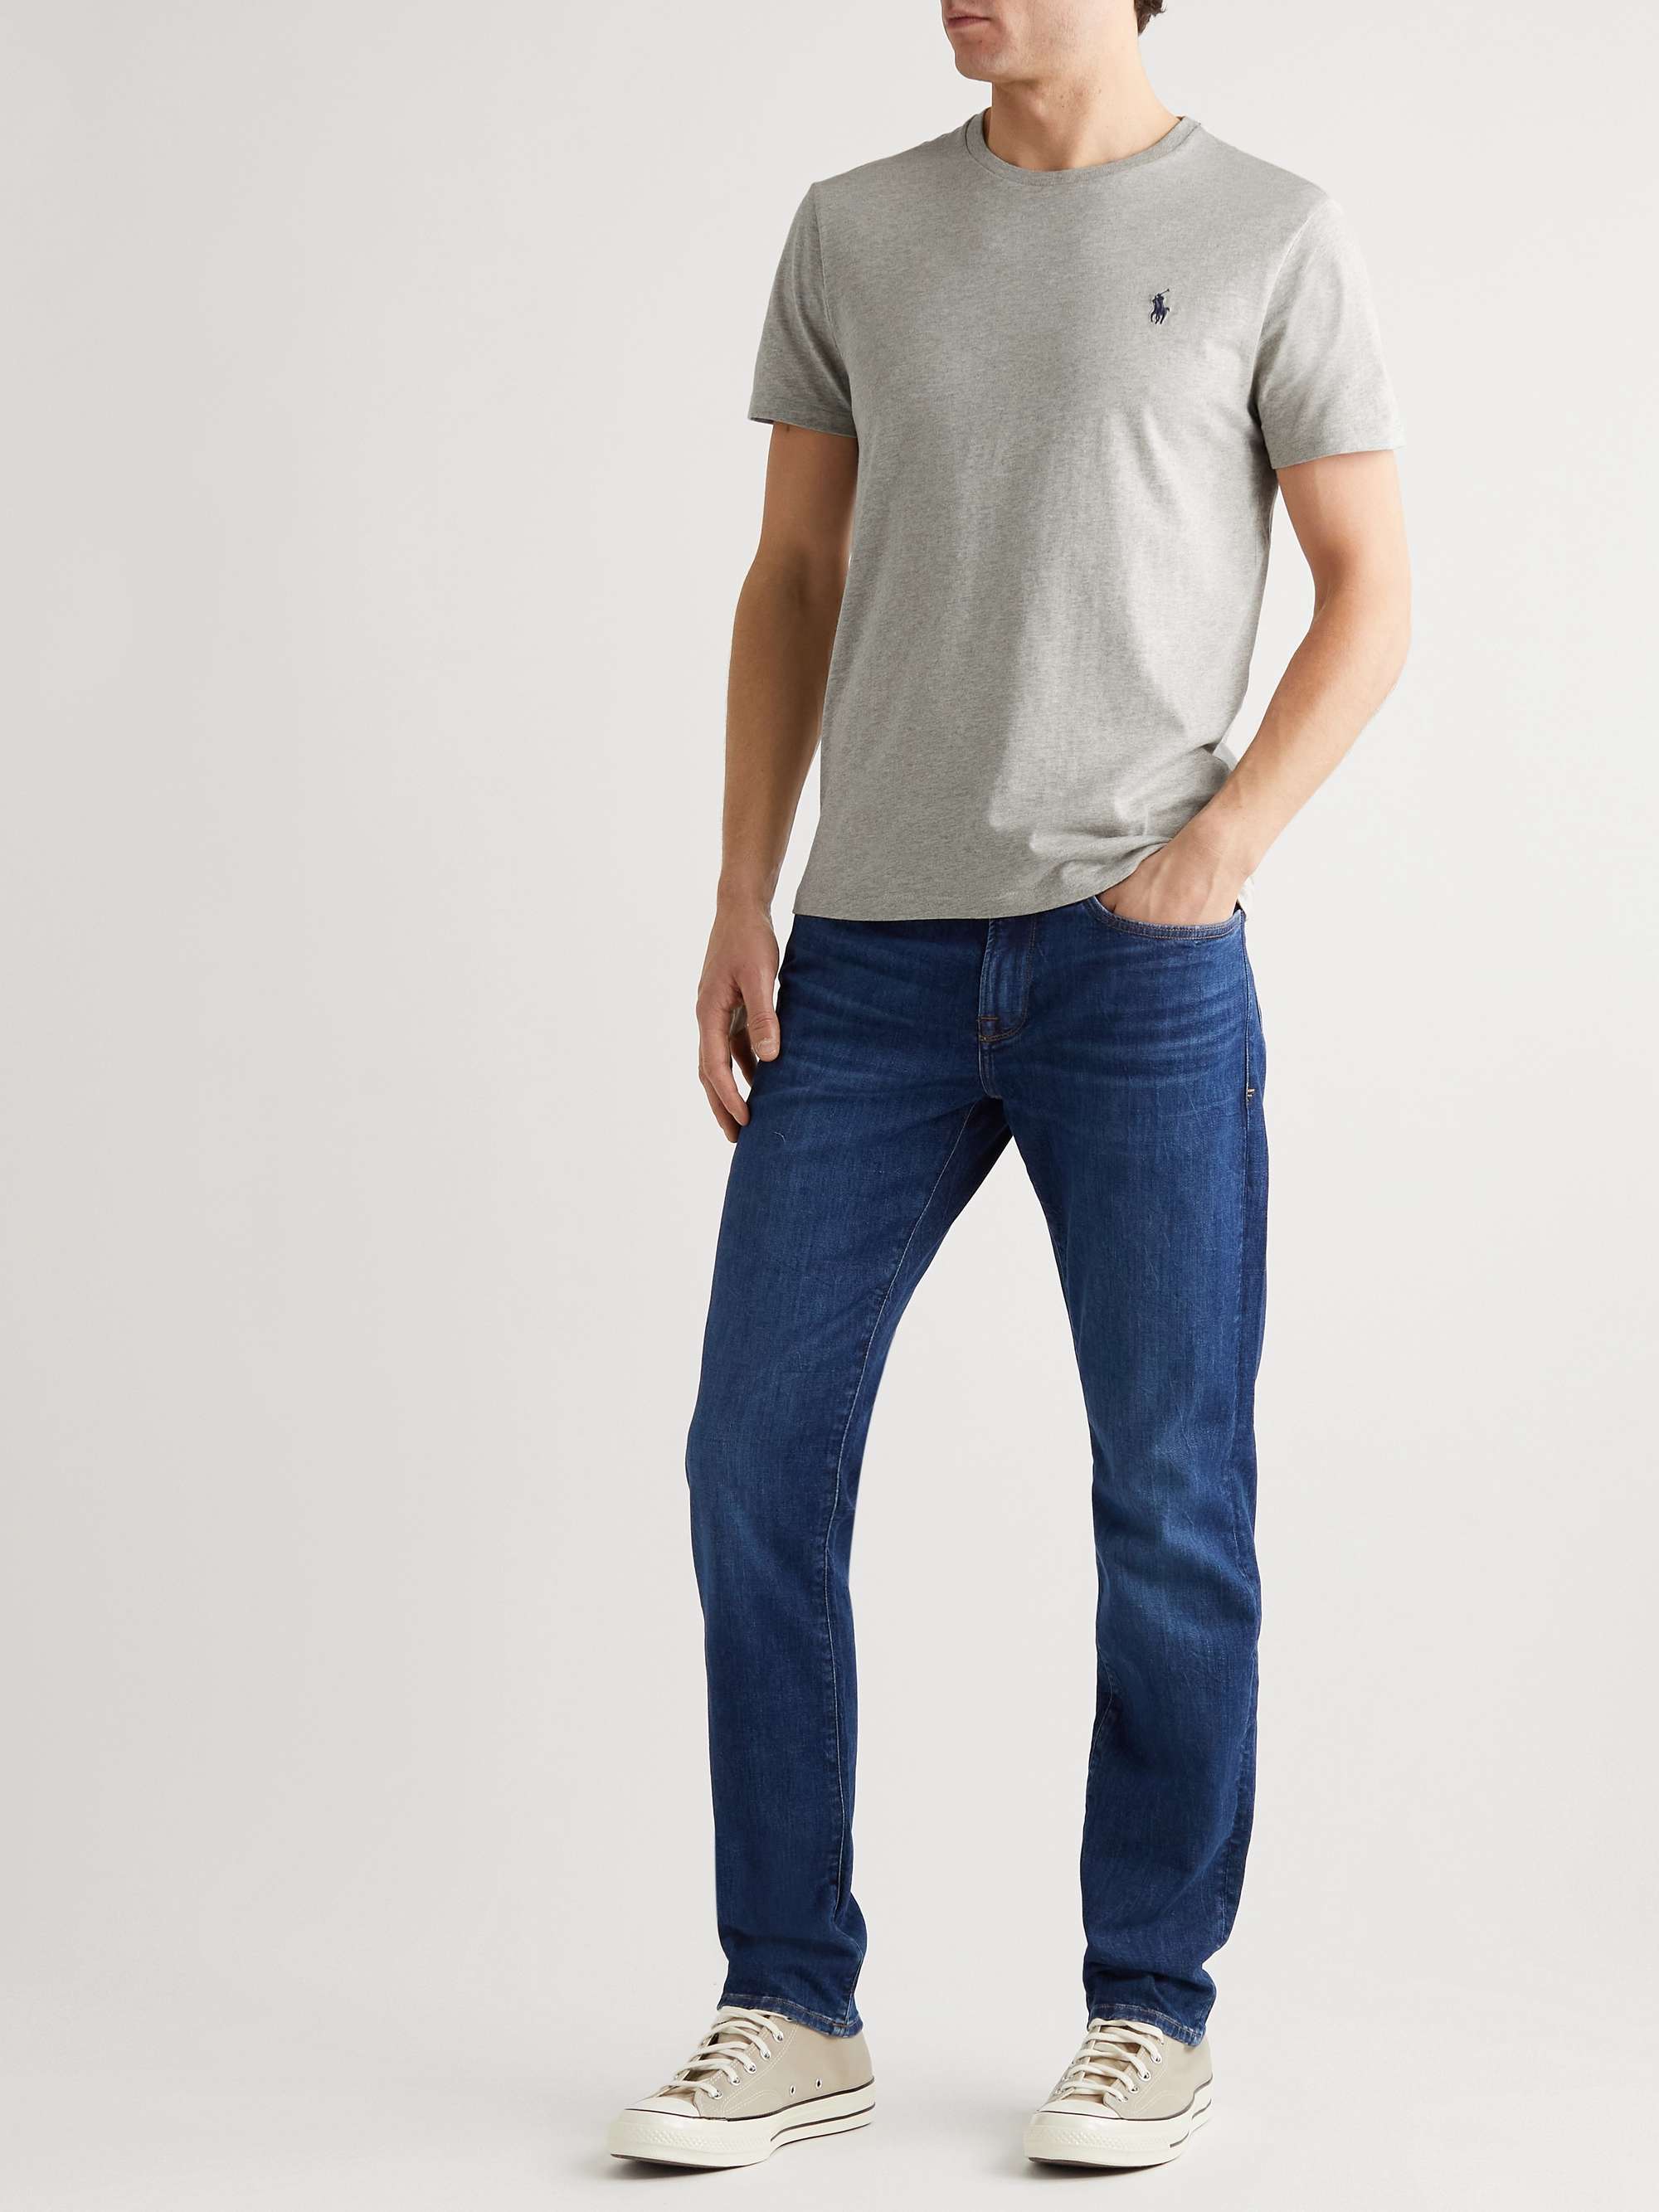 POLO RALPH LAUREN Slim-Fit Cotton-Jersey T-Shirt for Men | MR PORTER